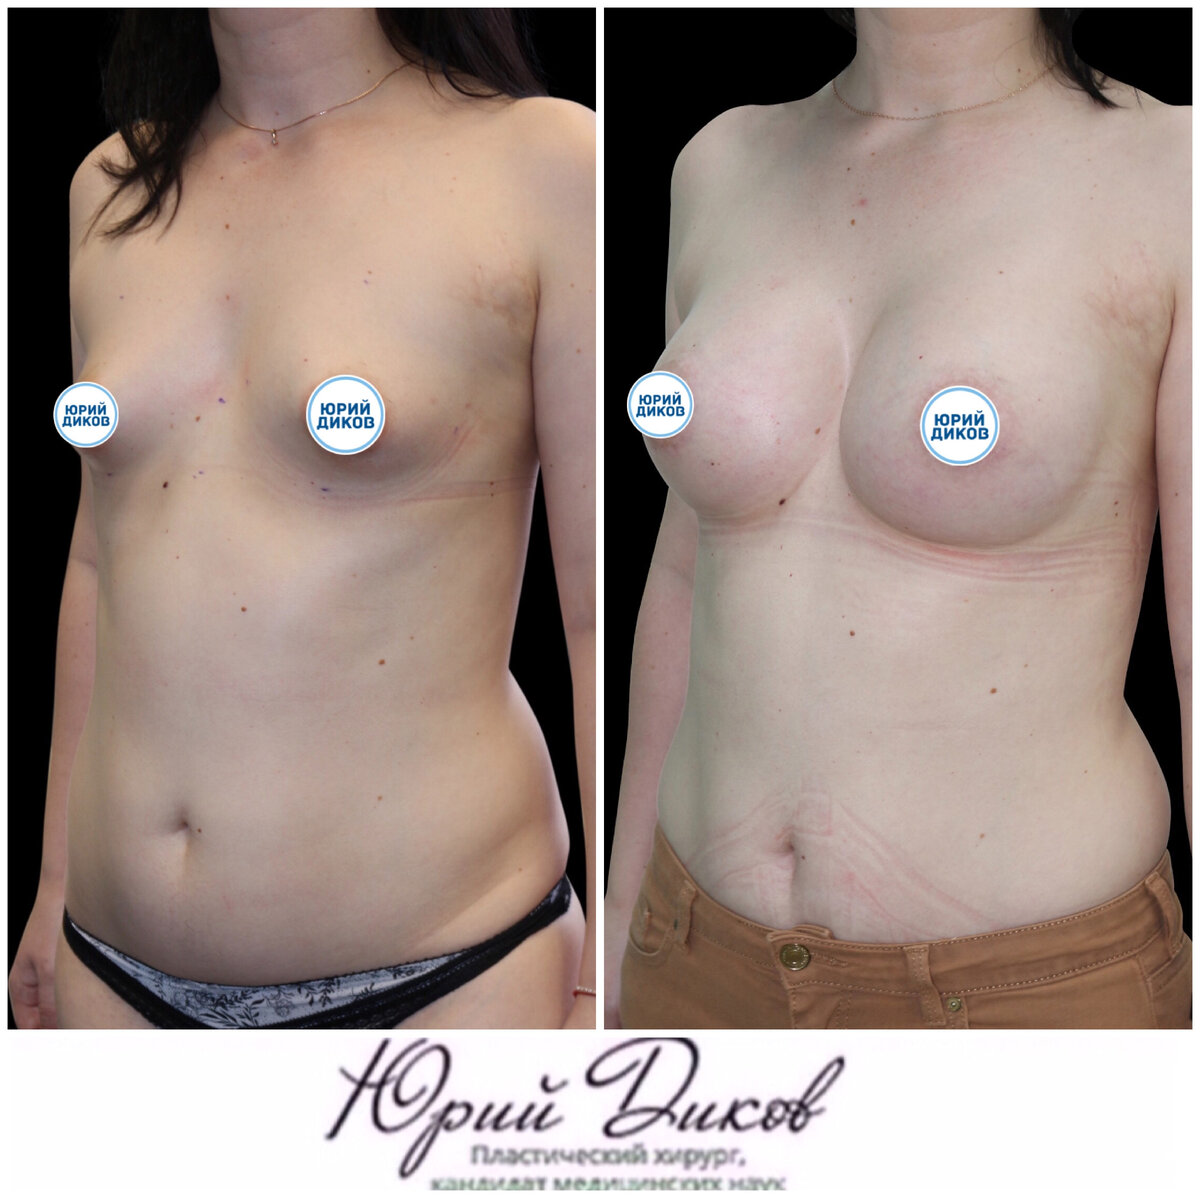 тубулярная деформация груди у женщин фото 18